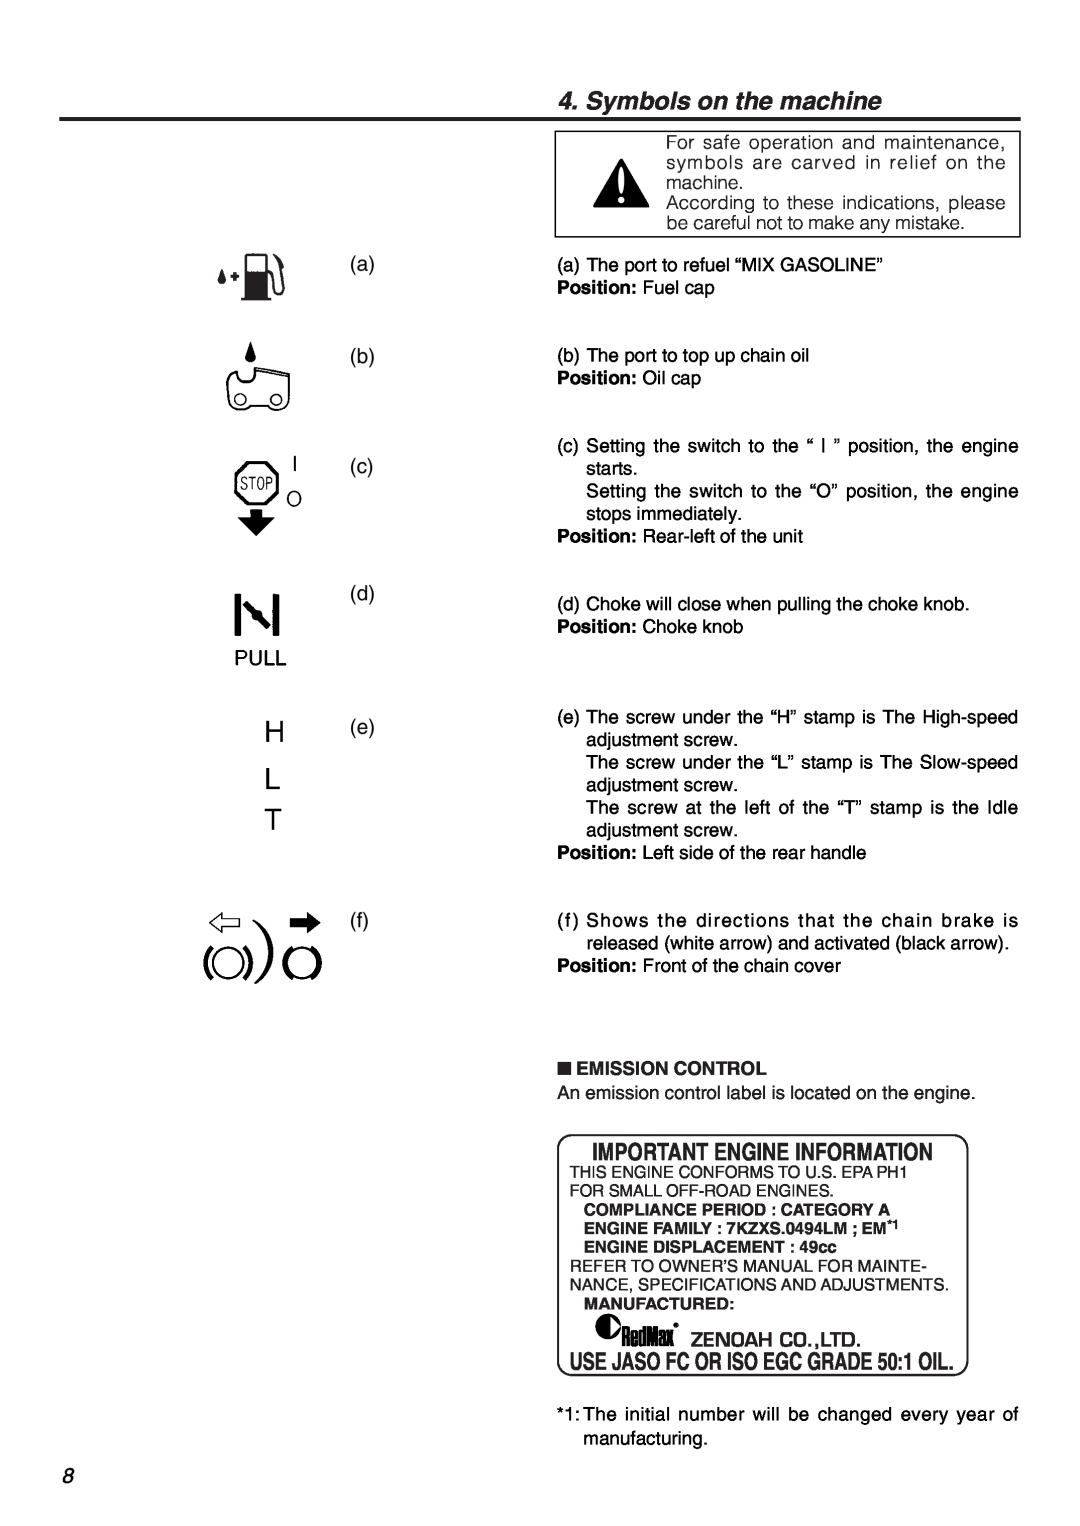 Zenoah G5000AVS manual Symbols on the machine, Important Engine Information 